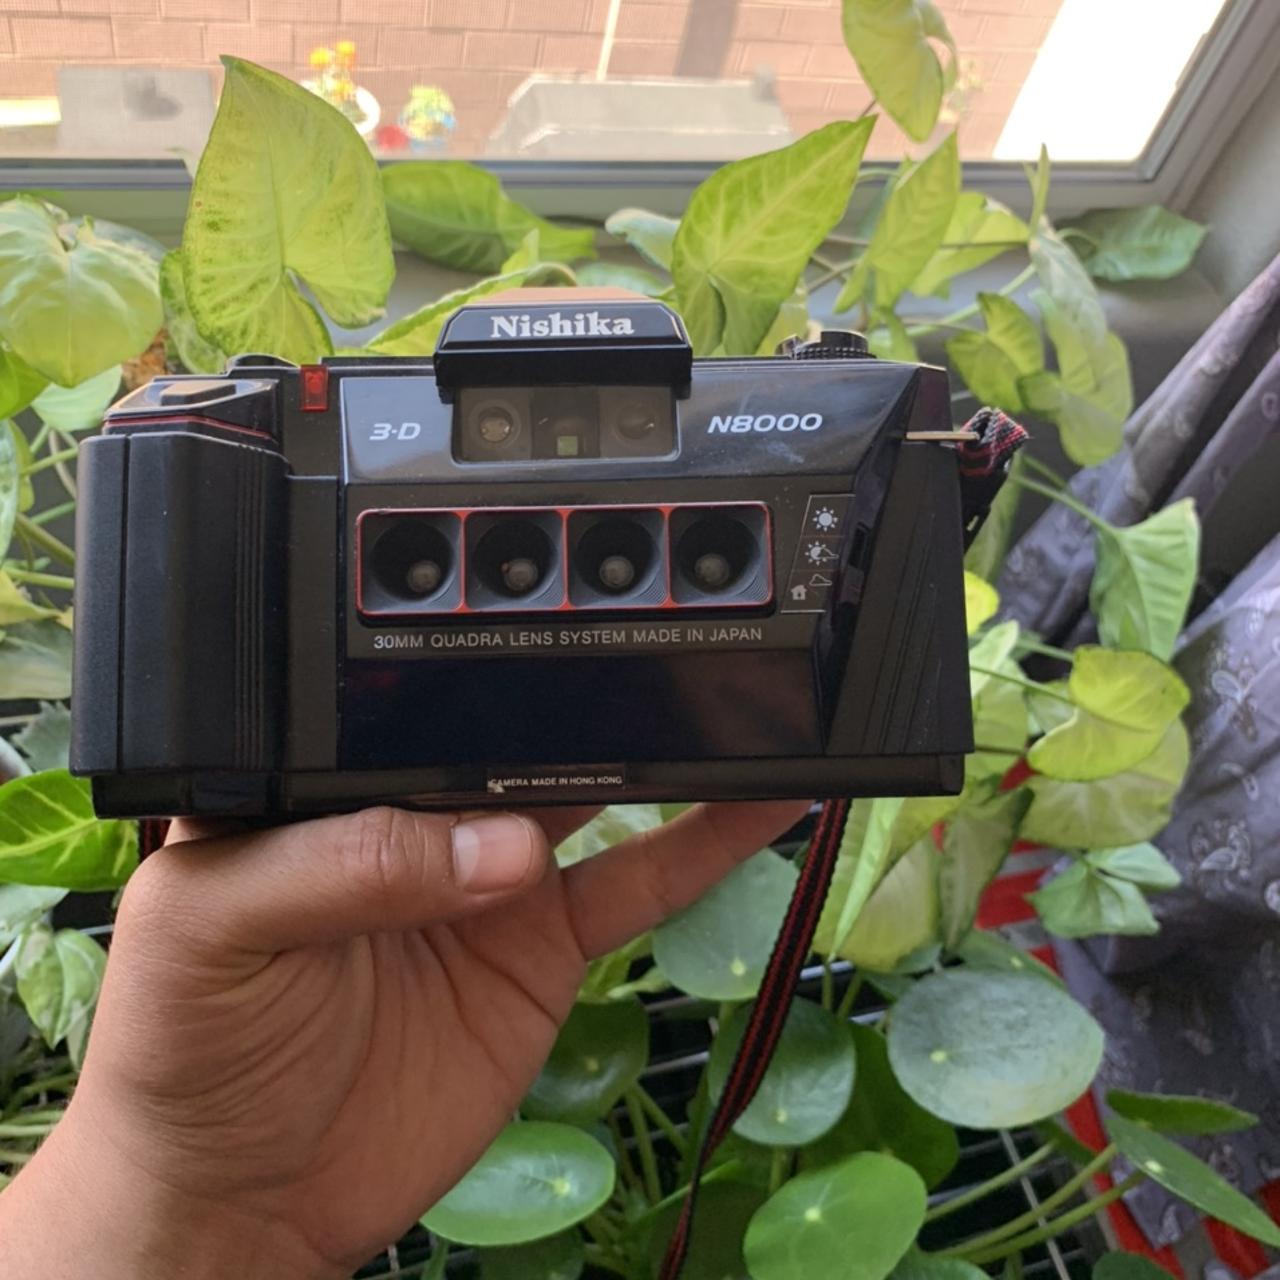 Nishika n8000 35mm Legendary camera Comes with... - Depop